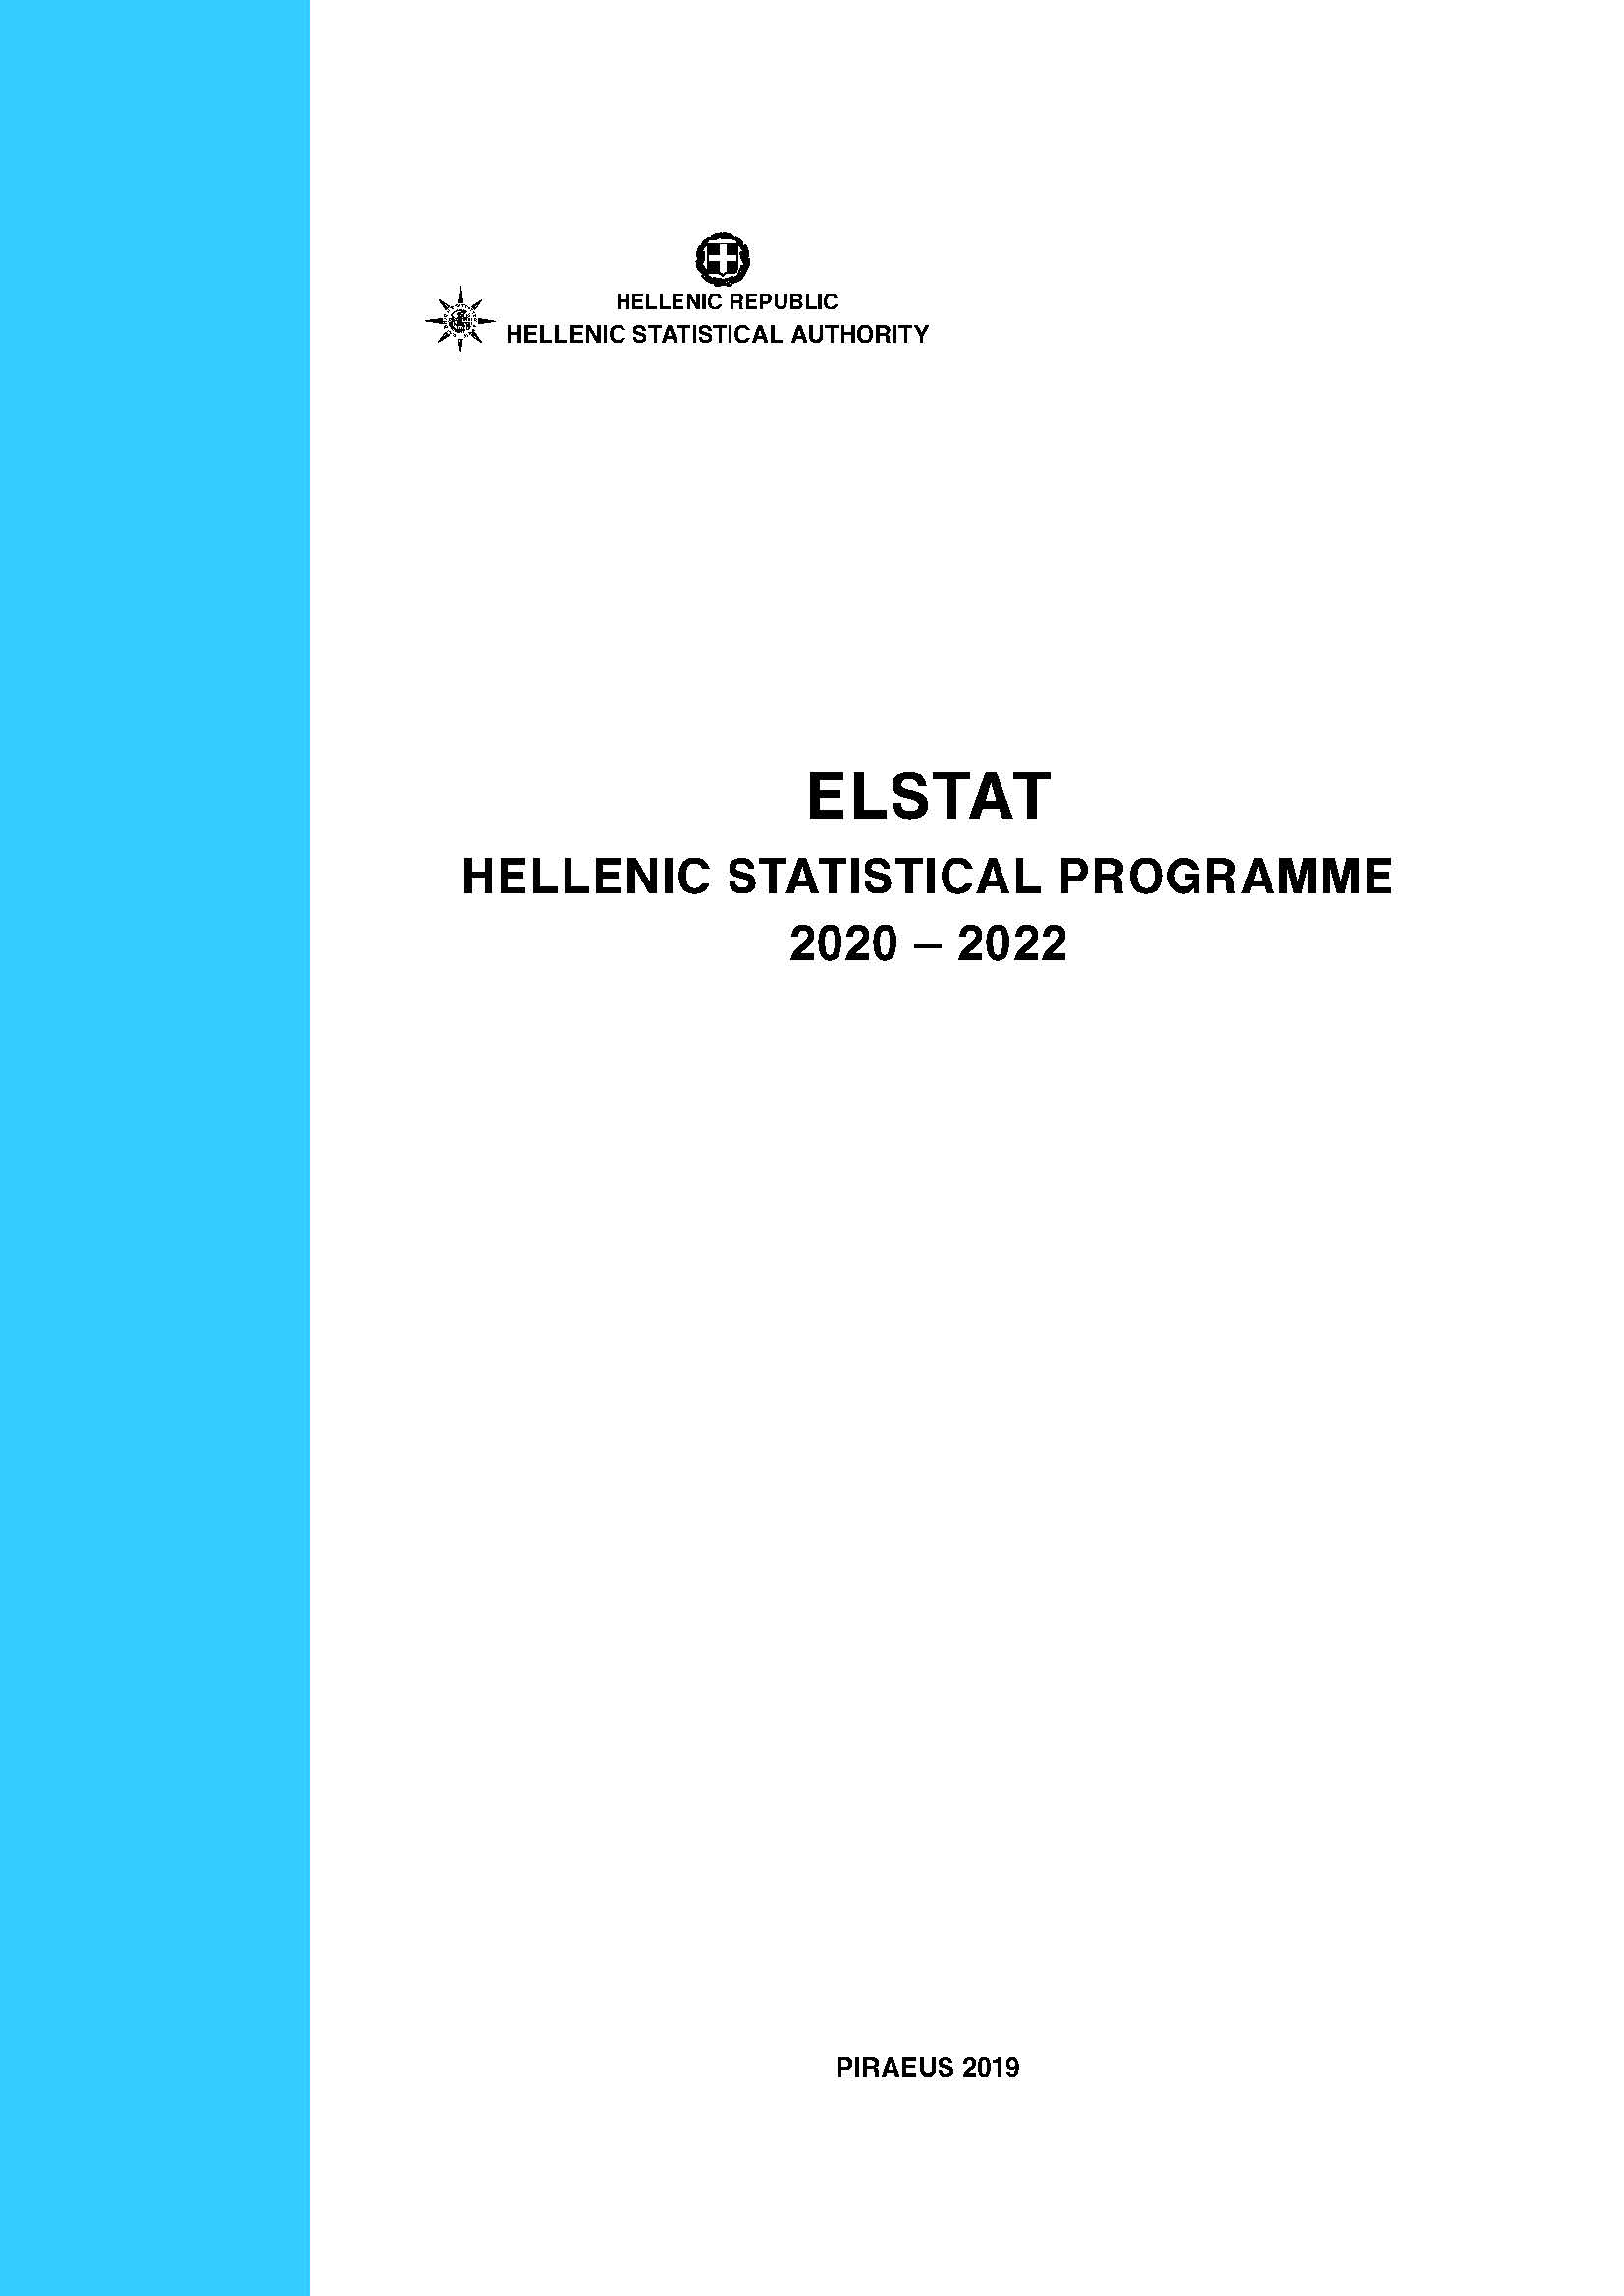 Hellenic Statistical Program 2020-2022